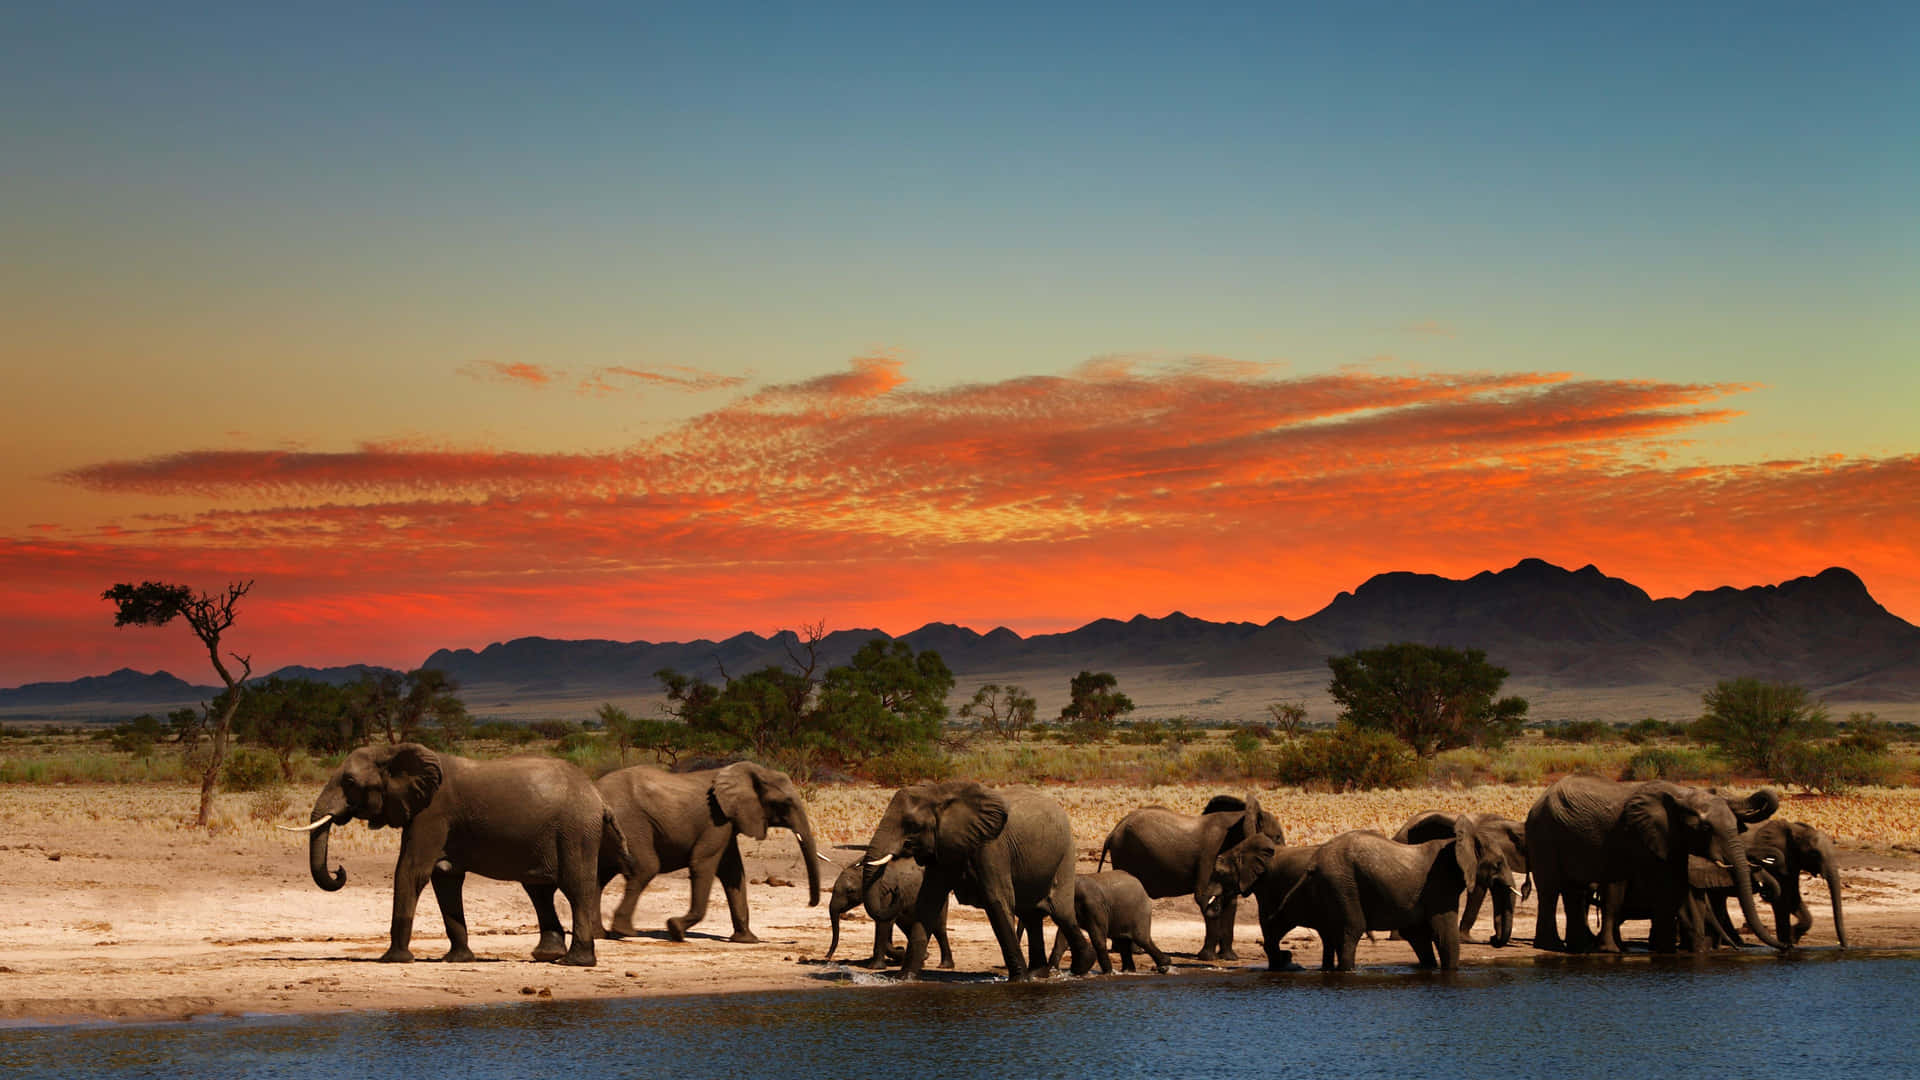 Safari Elephants Aesthetic Sunset African Wildlife Picture